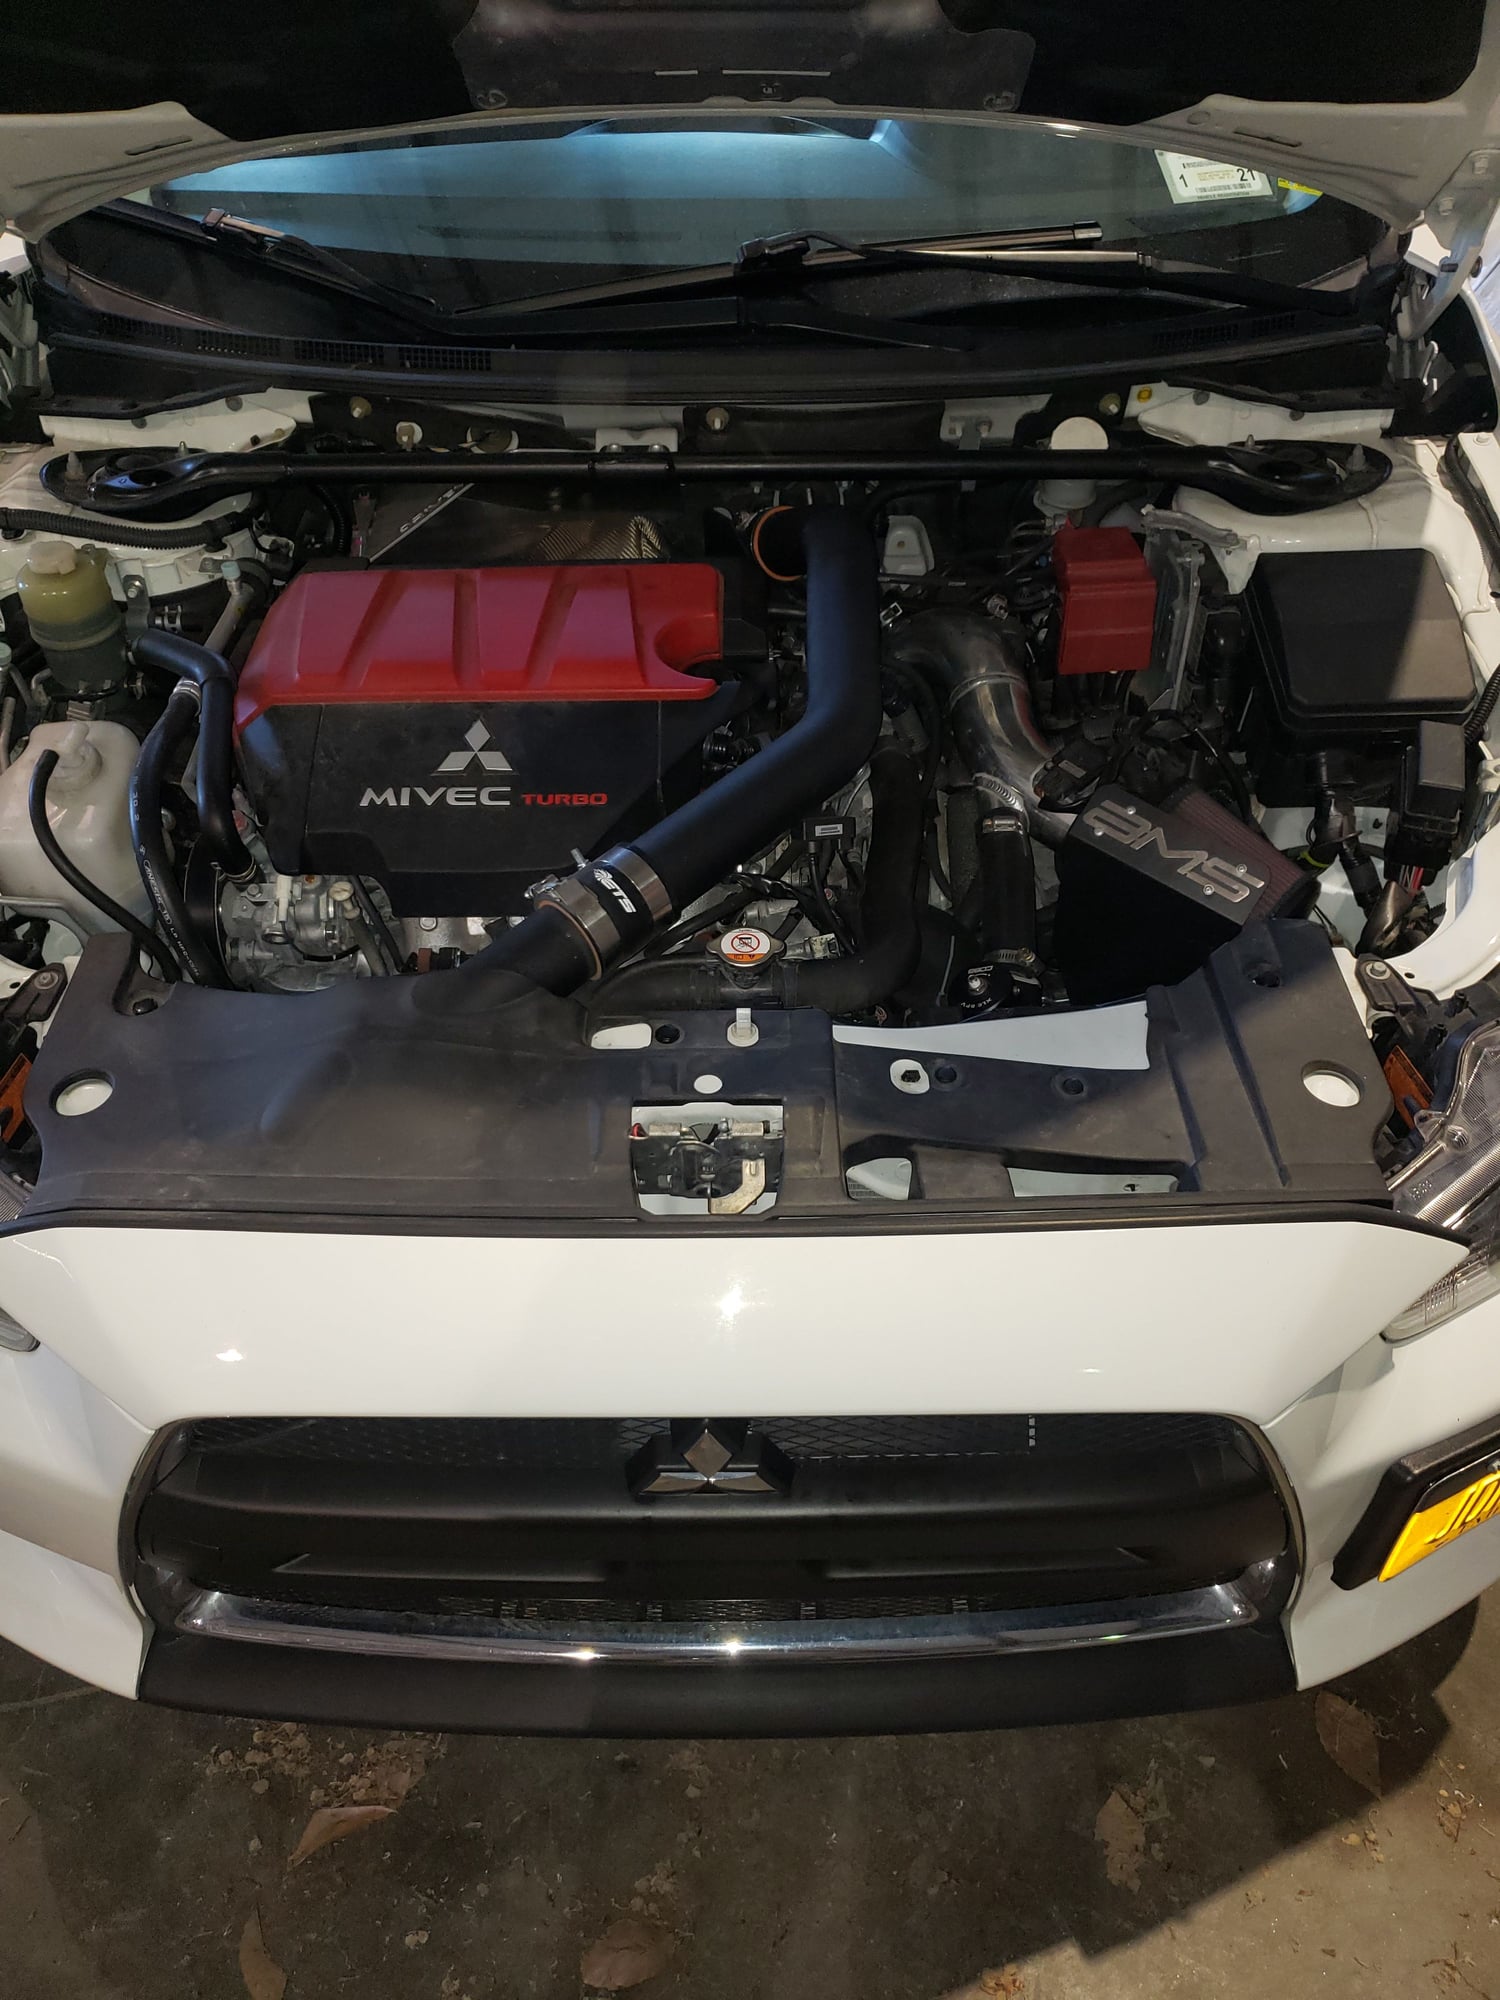 2015 Mitsubishi Lancer Evolution - Fresh Built Street Car - Used - VIN JA32W5FV7FU008636 - 33,000 Miles - 4 cyl - AWD - Automatic - Sedan - White - Queensbury, NY 12804, United States